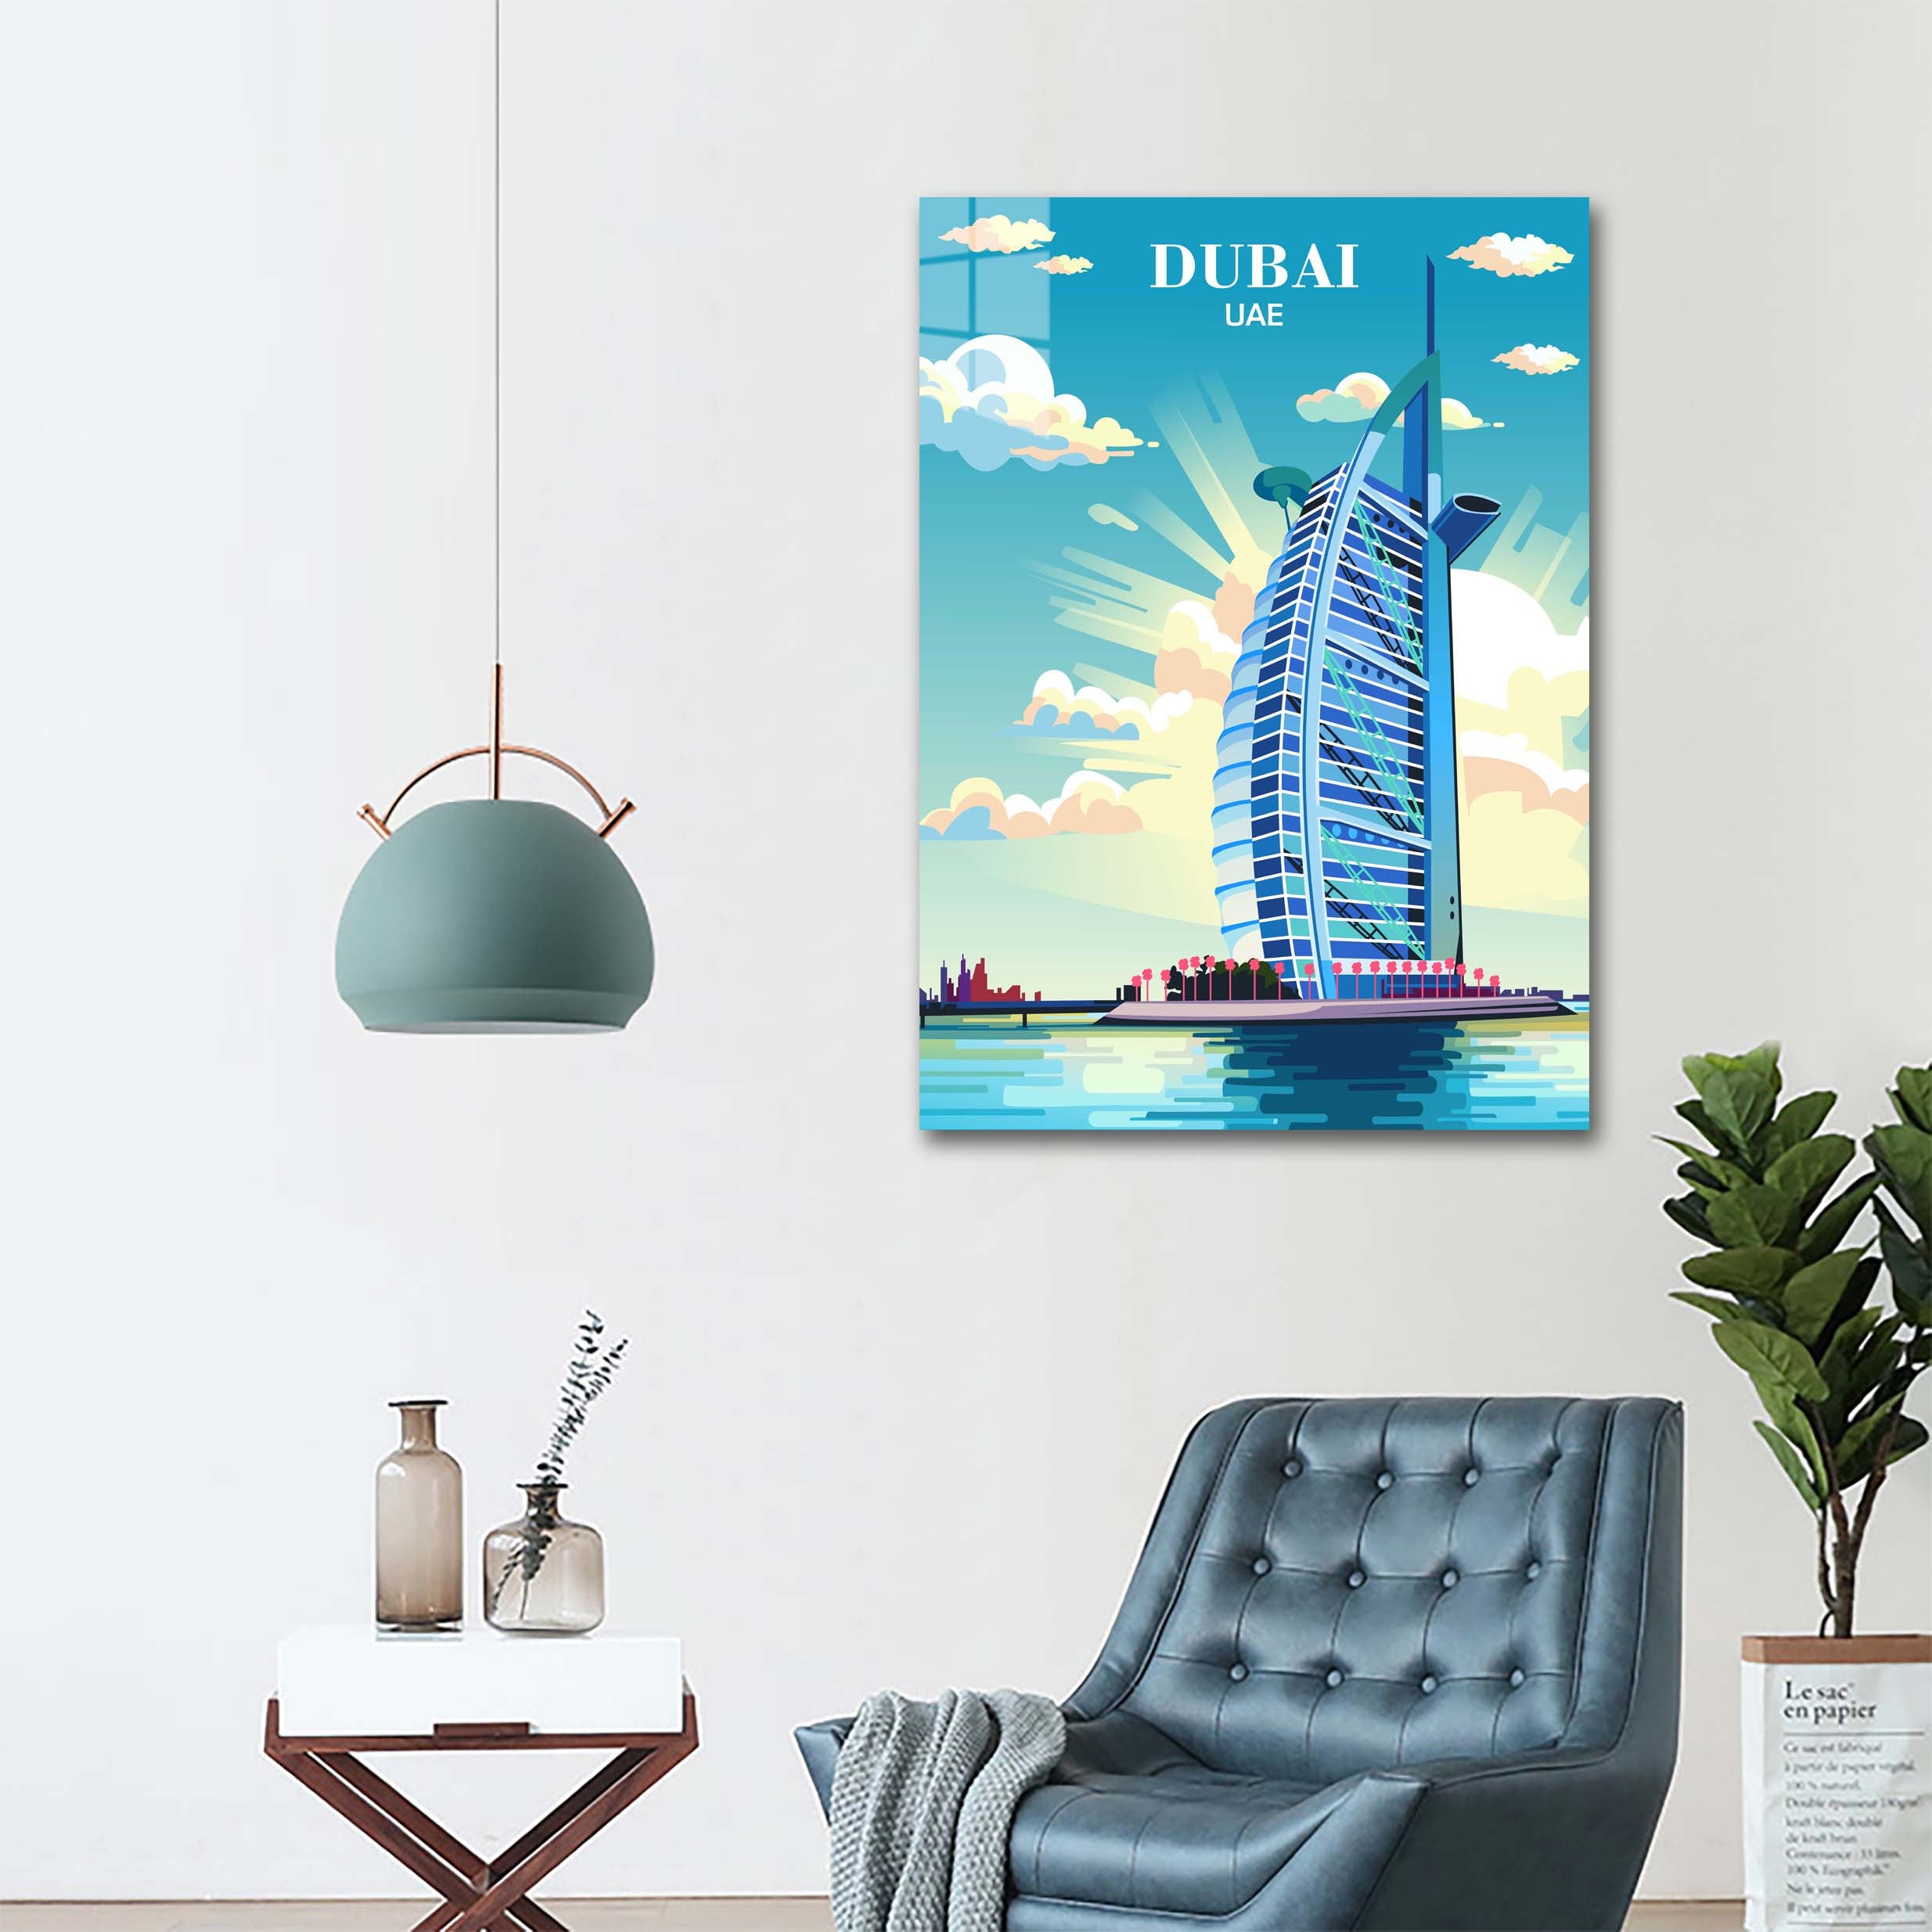 Travel Poster Dubai UAE-designed by @dikasujud